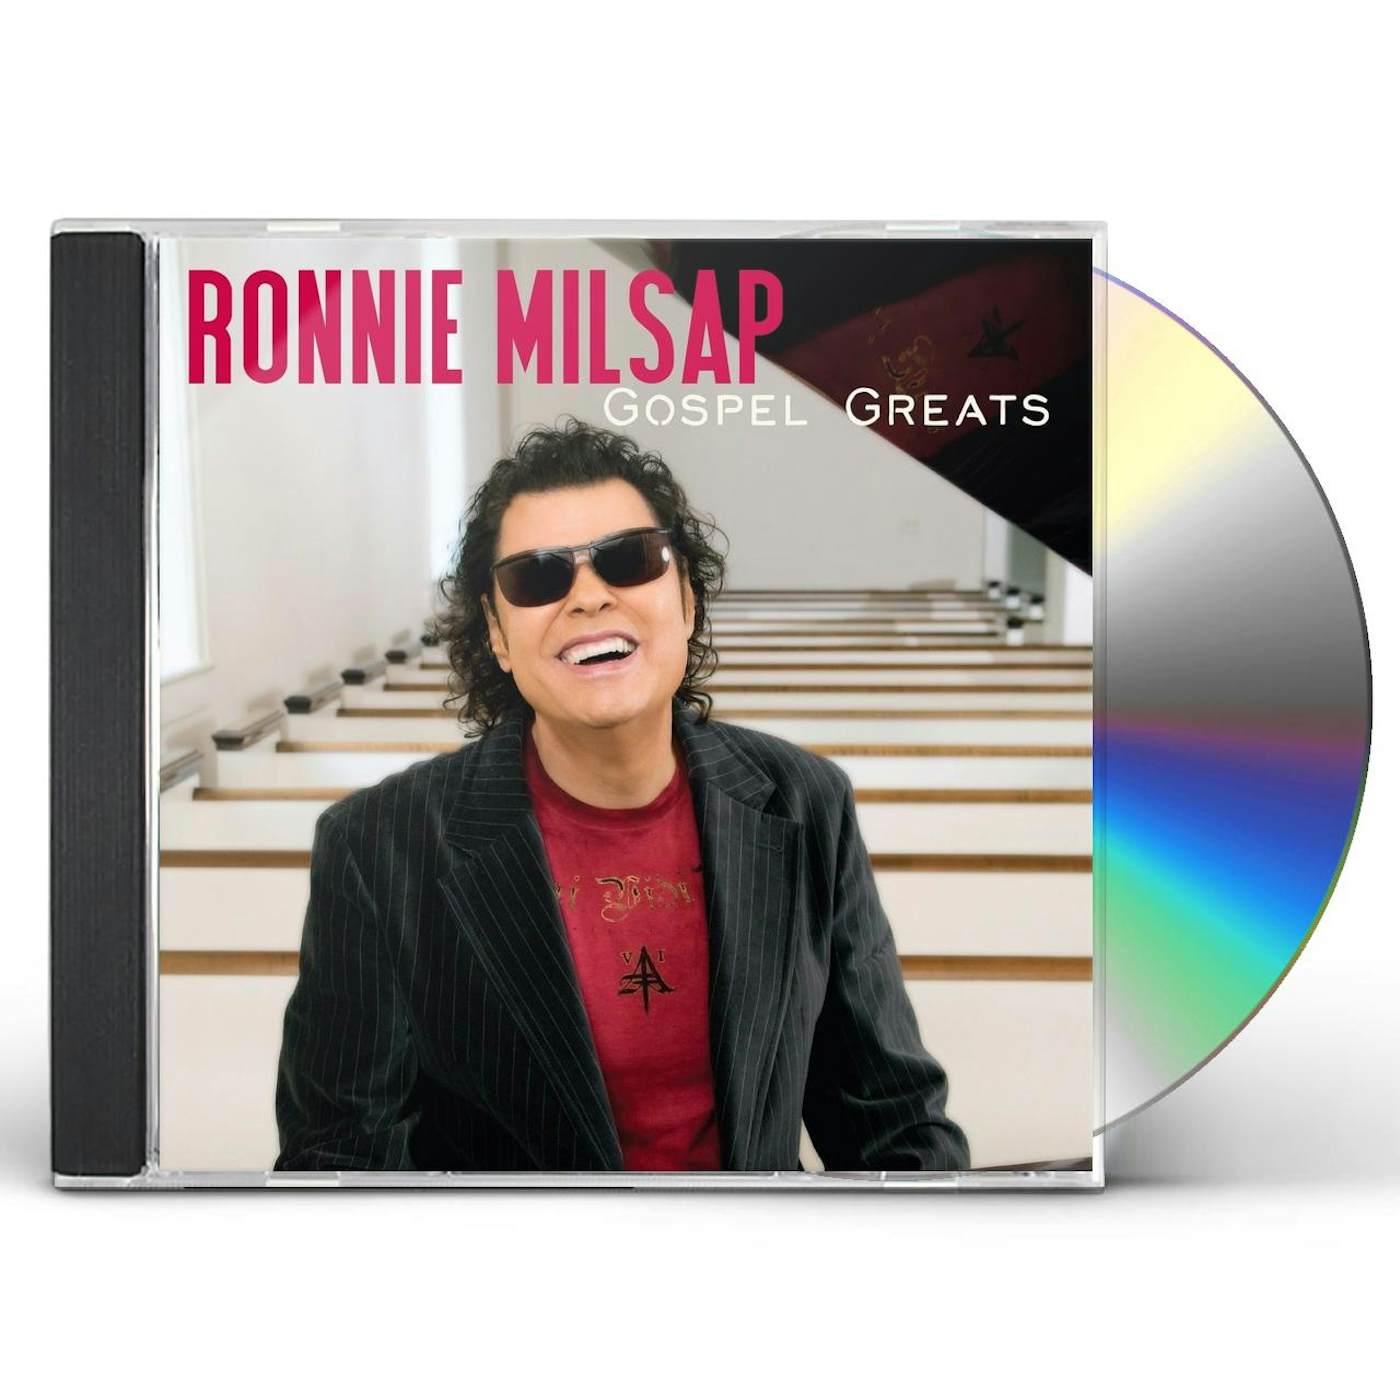 Ronnie Milsap GOSPEL GREATS CD